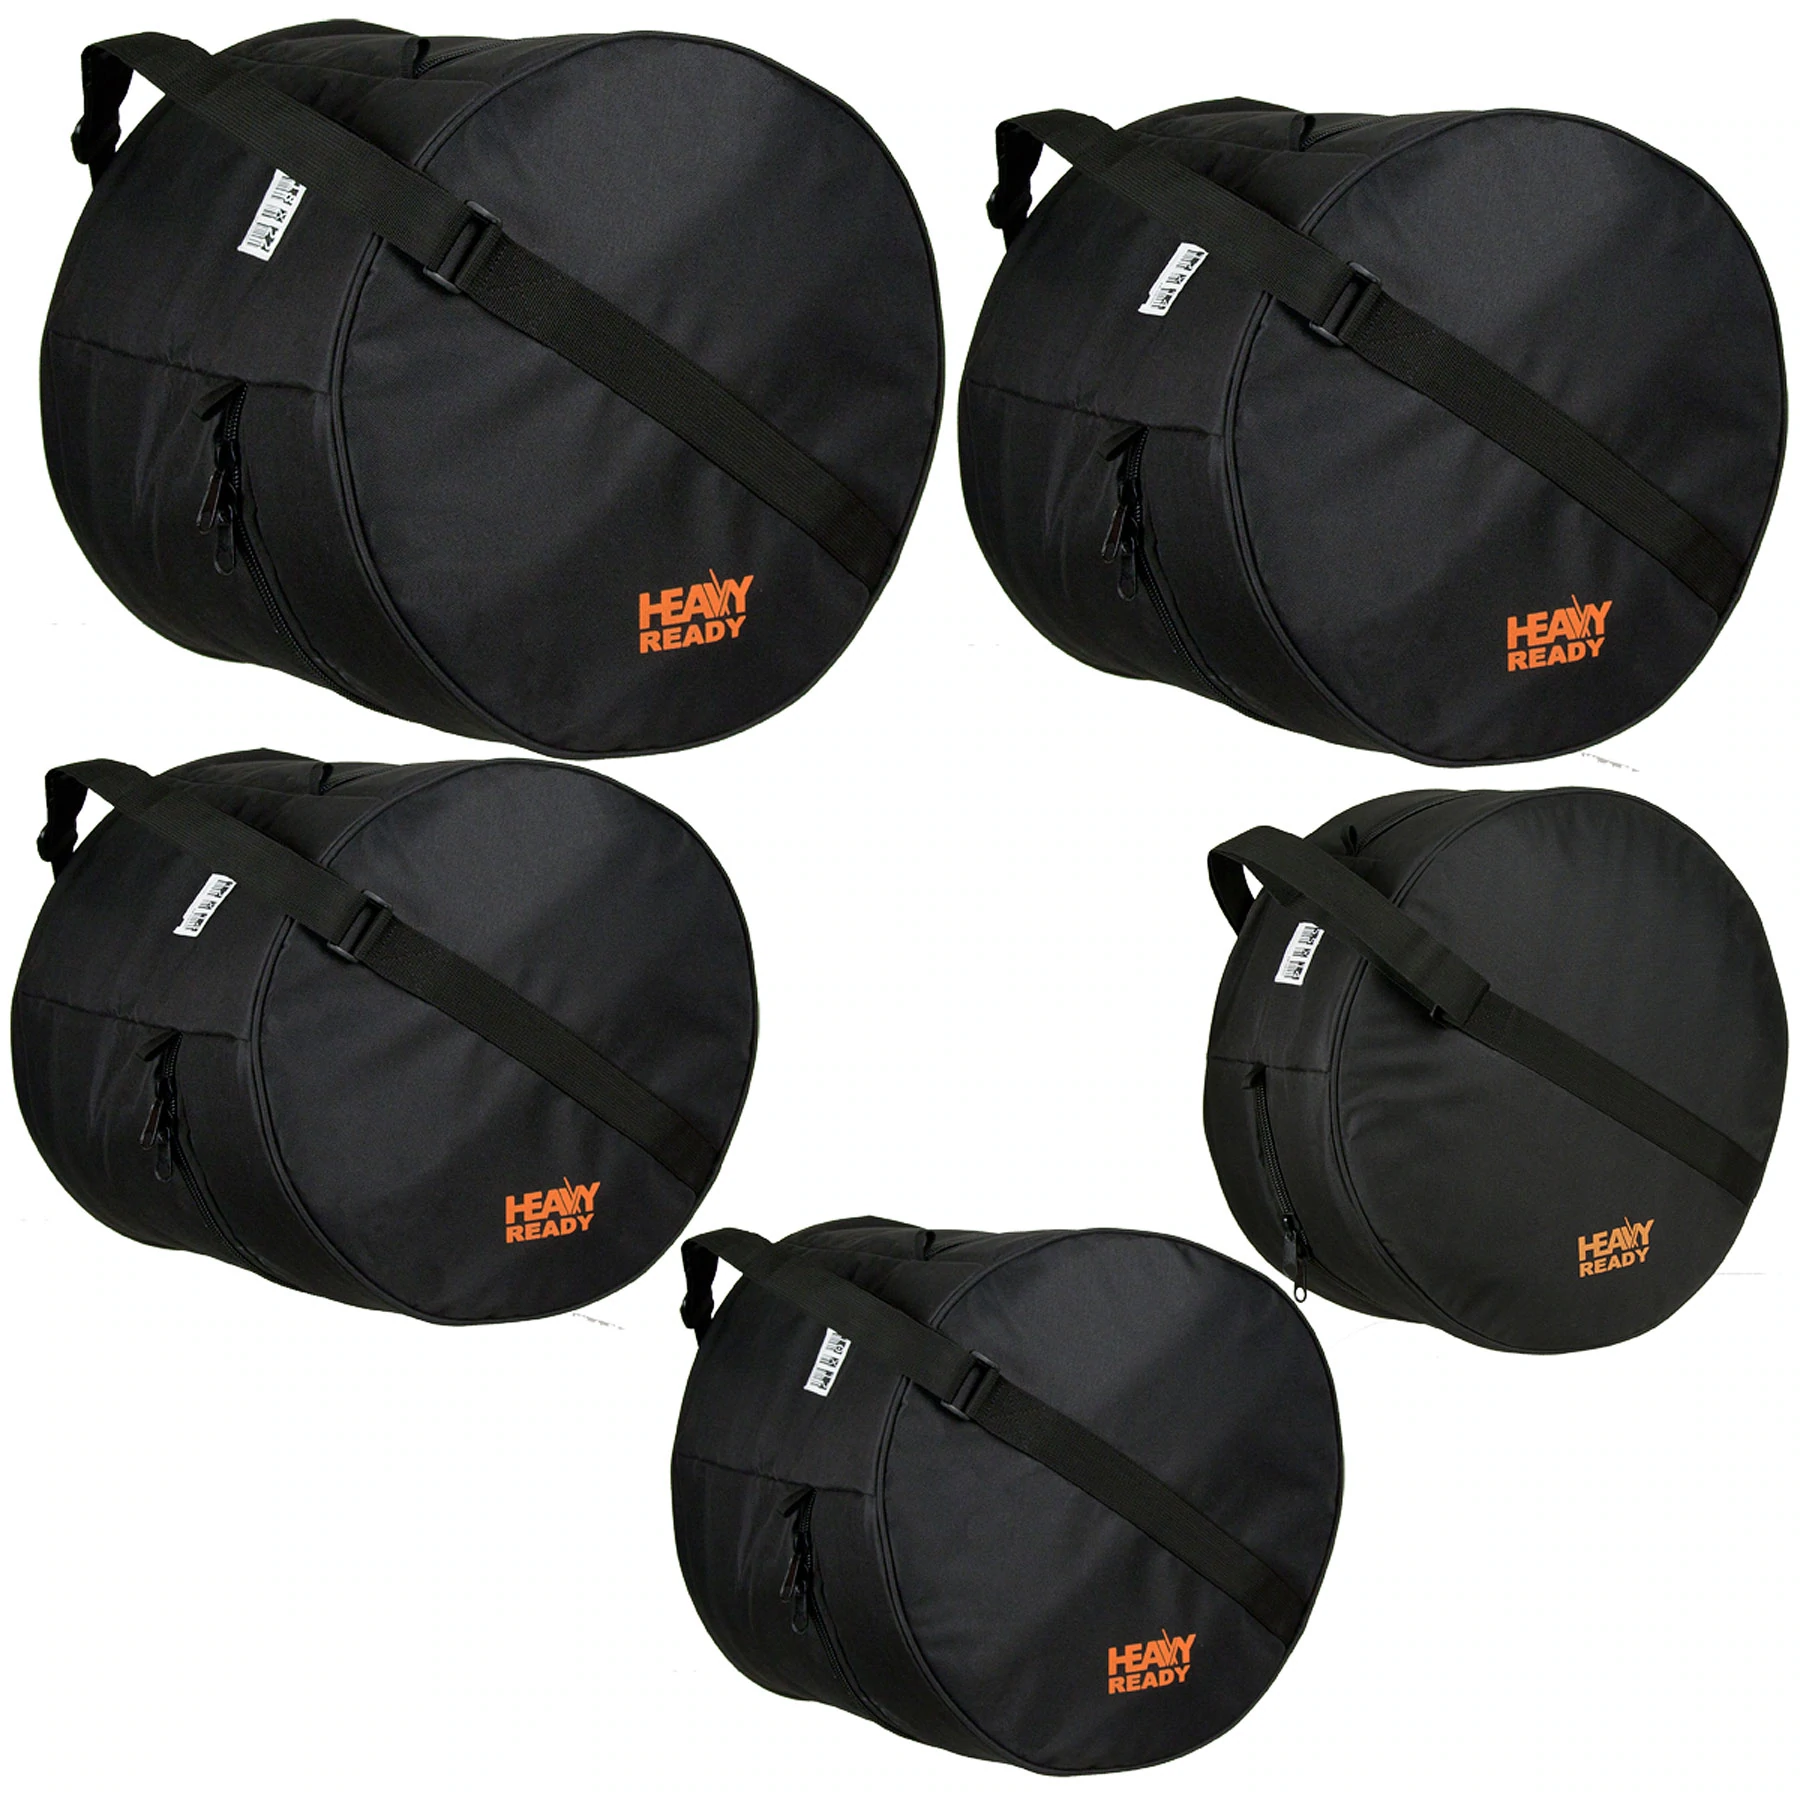 PROTEC Heavy Ready 5pc Bag Kit - Standard 3